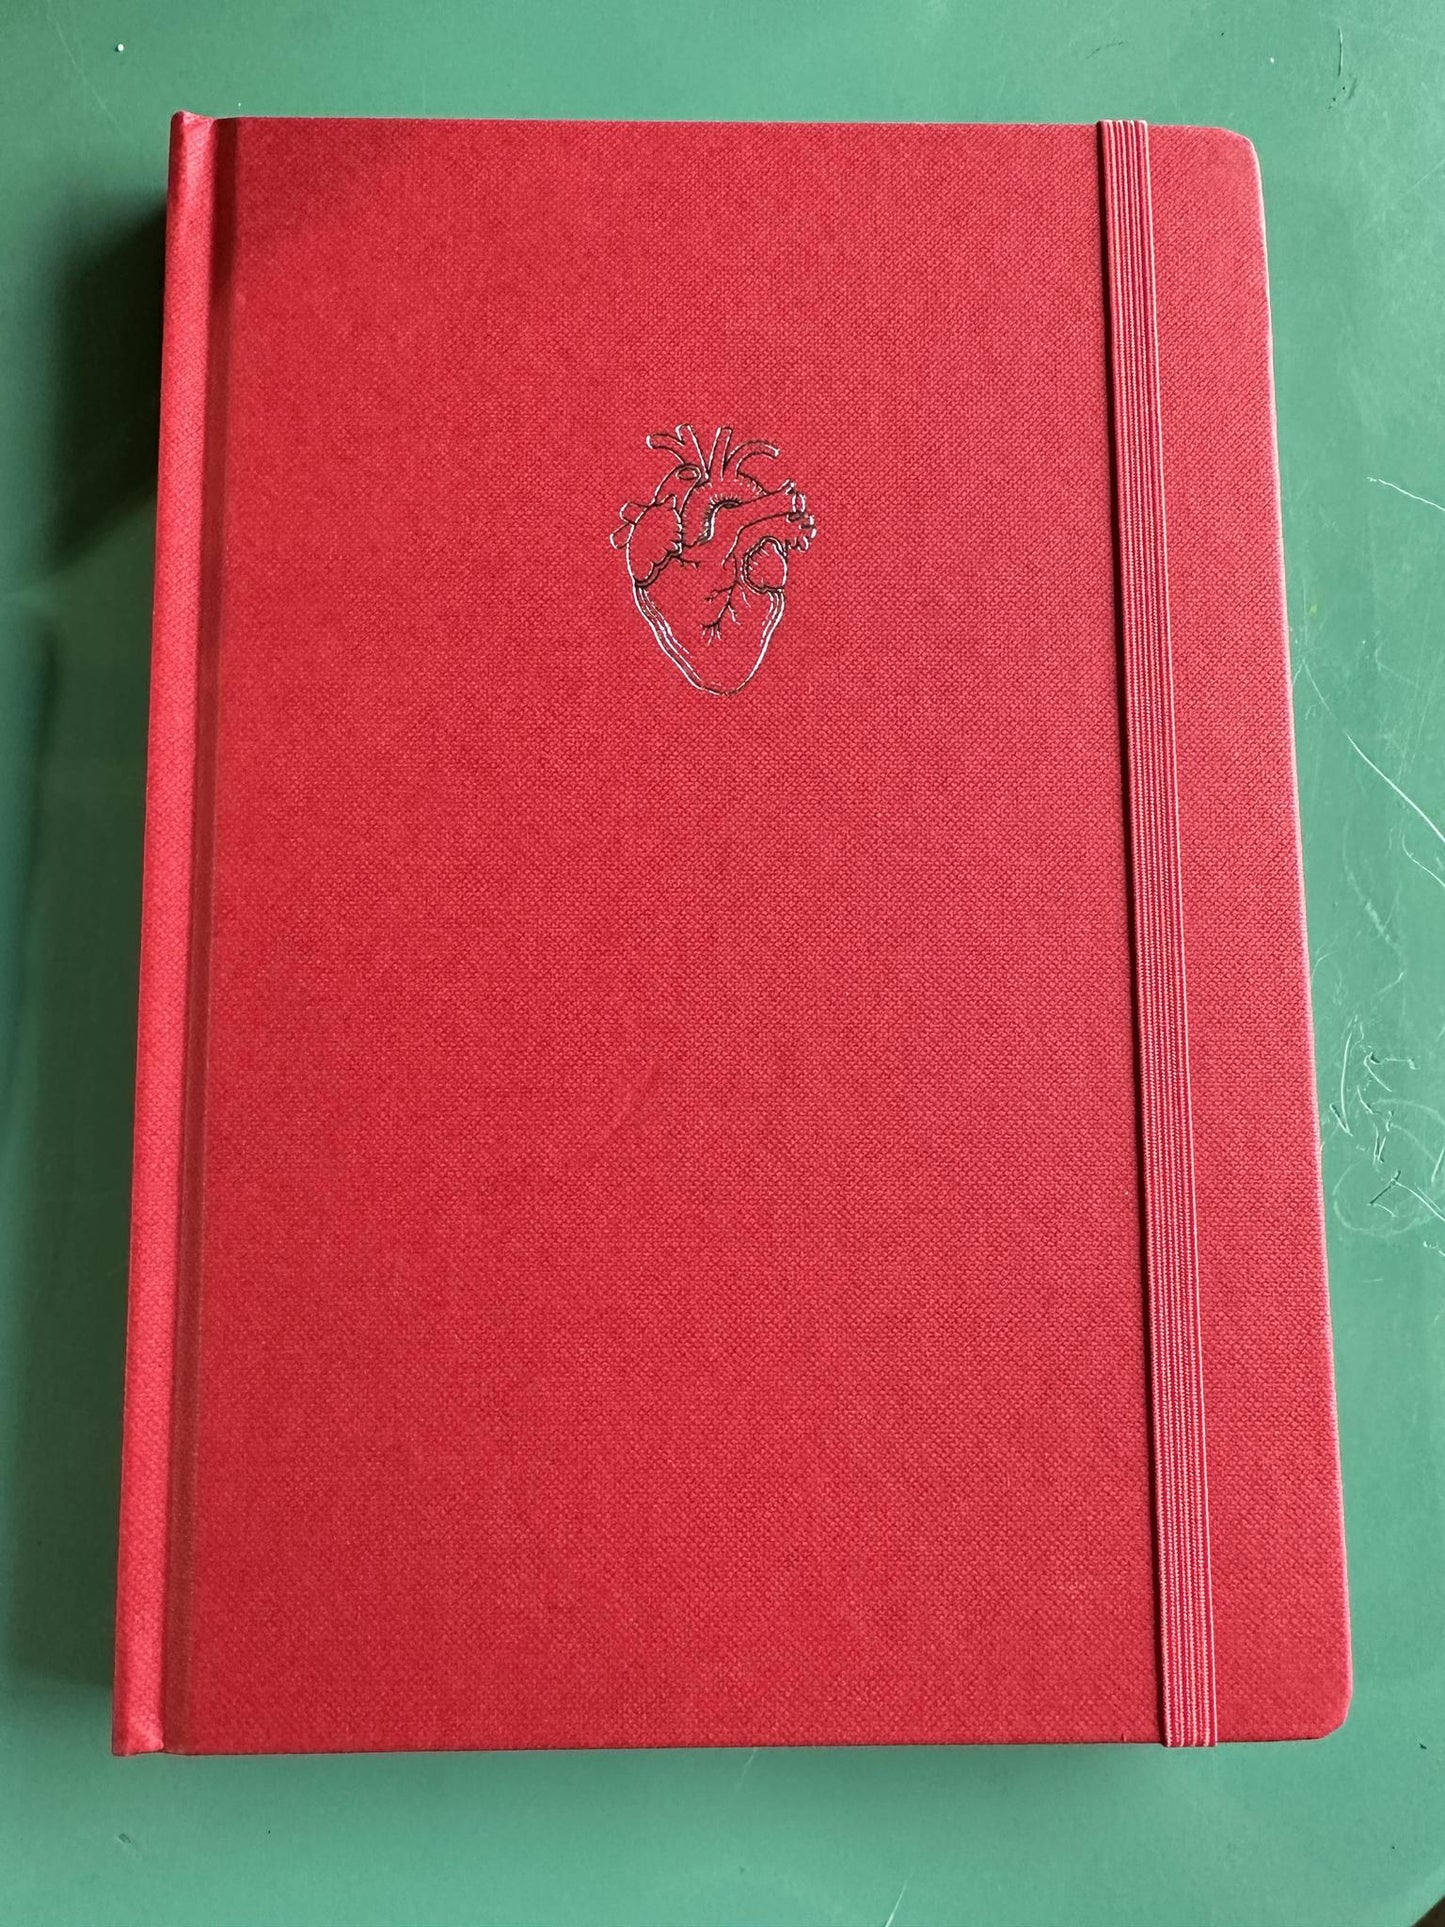 Heart Notebook hardcover